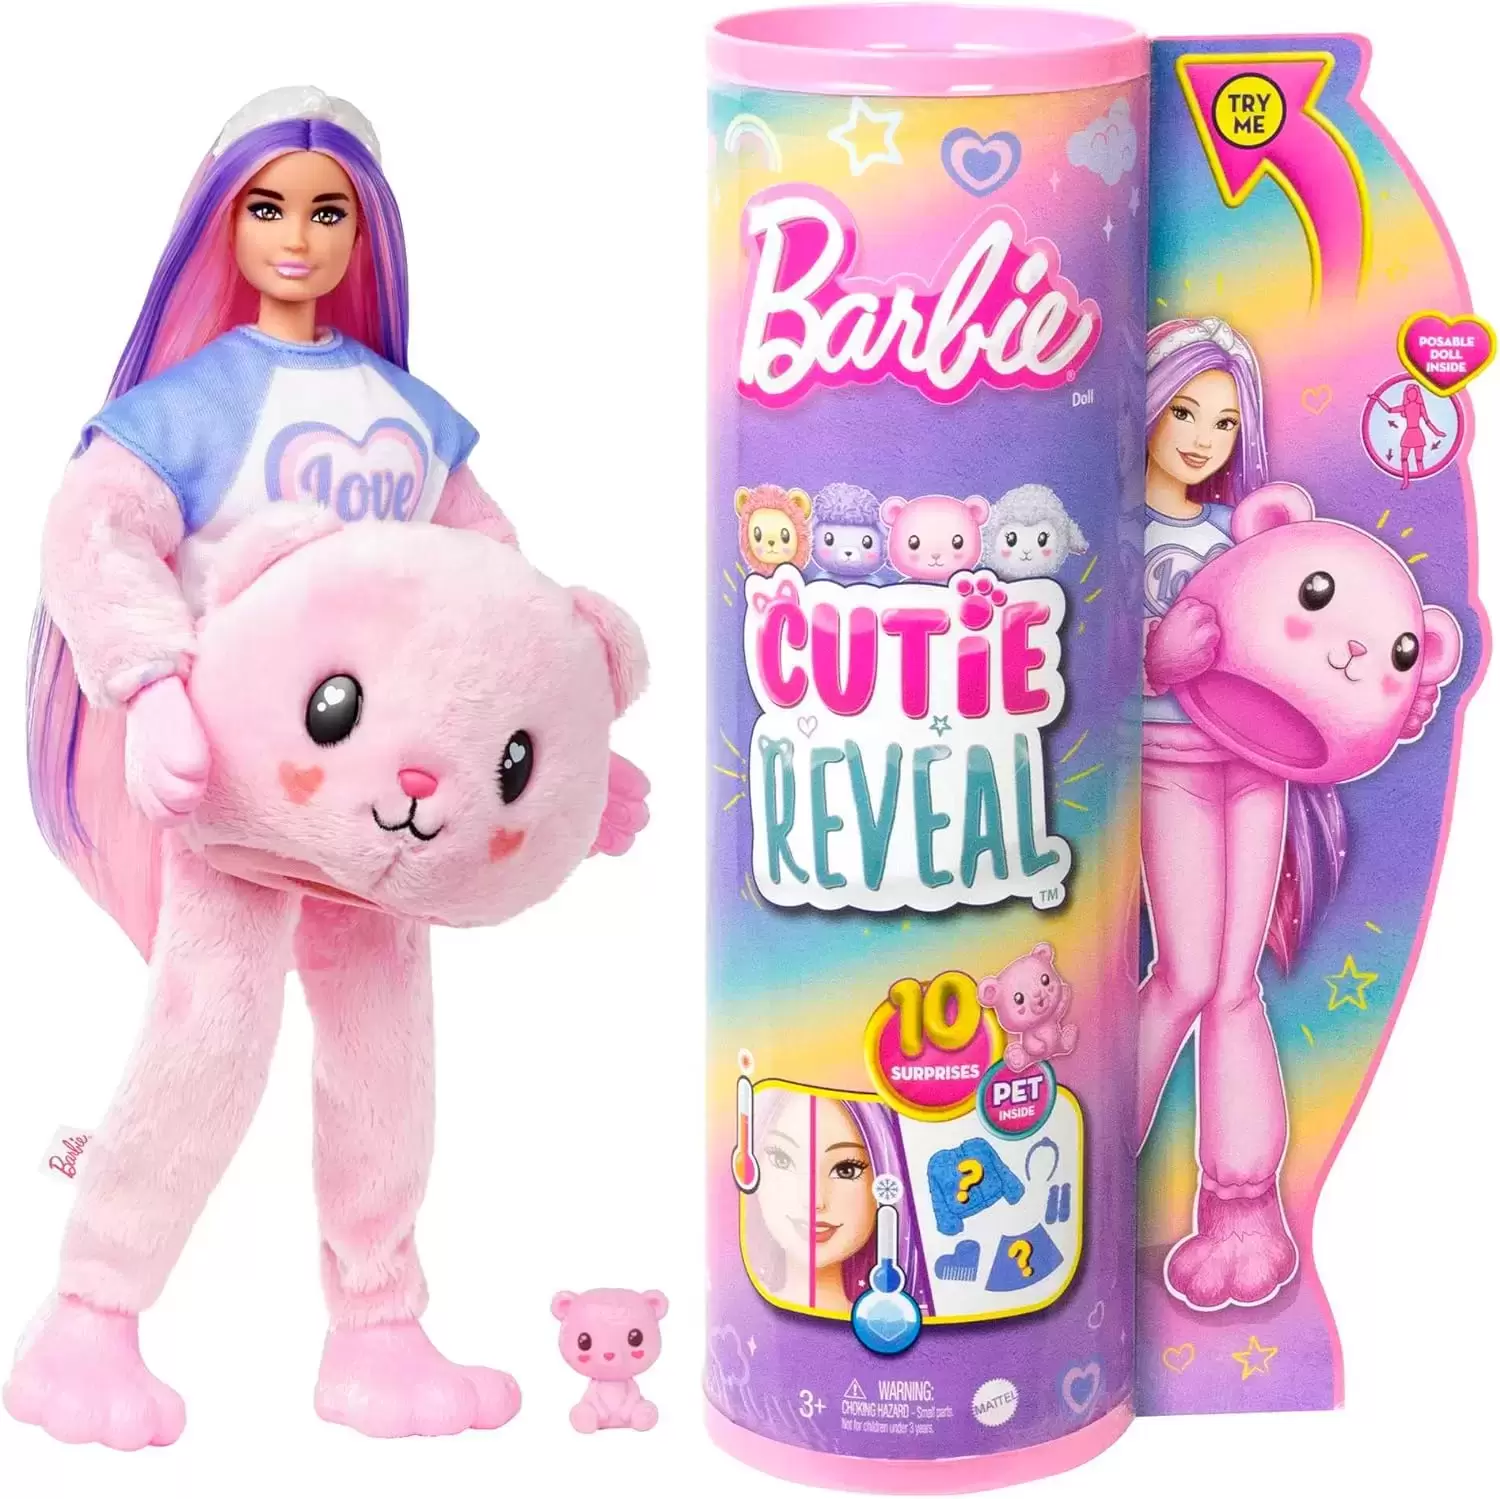 Barbie Cutie Reveal - Teddy bear